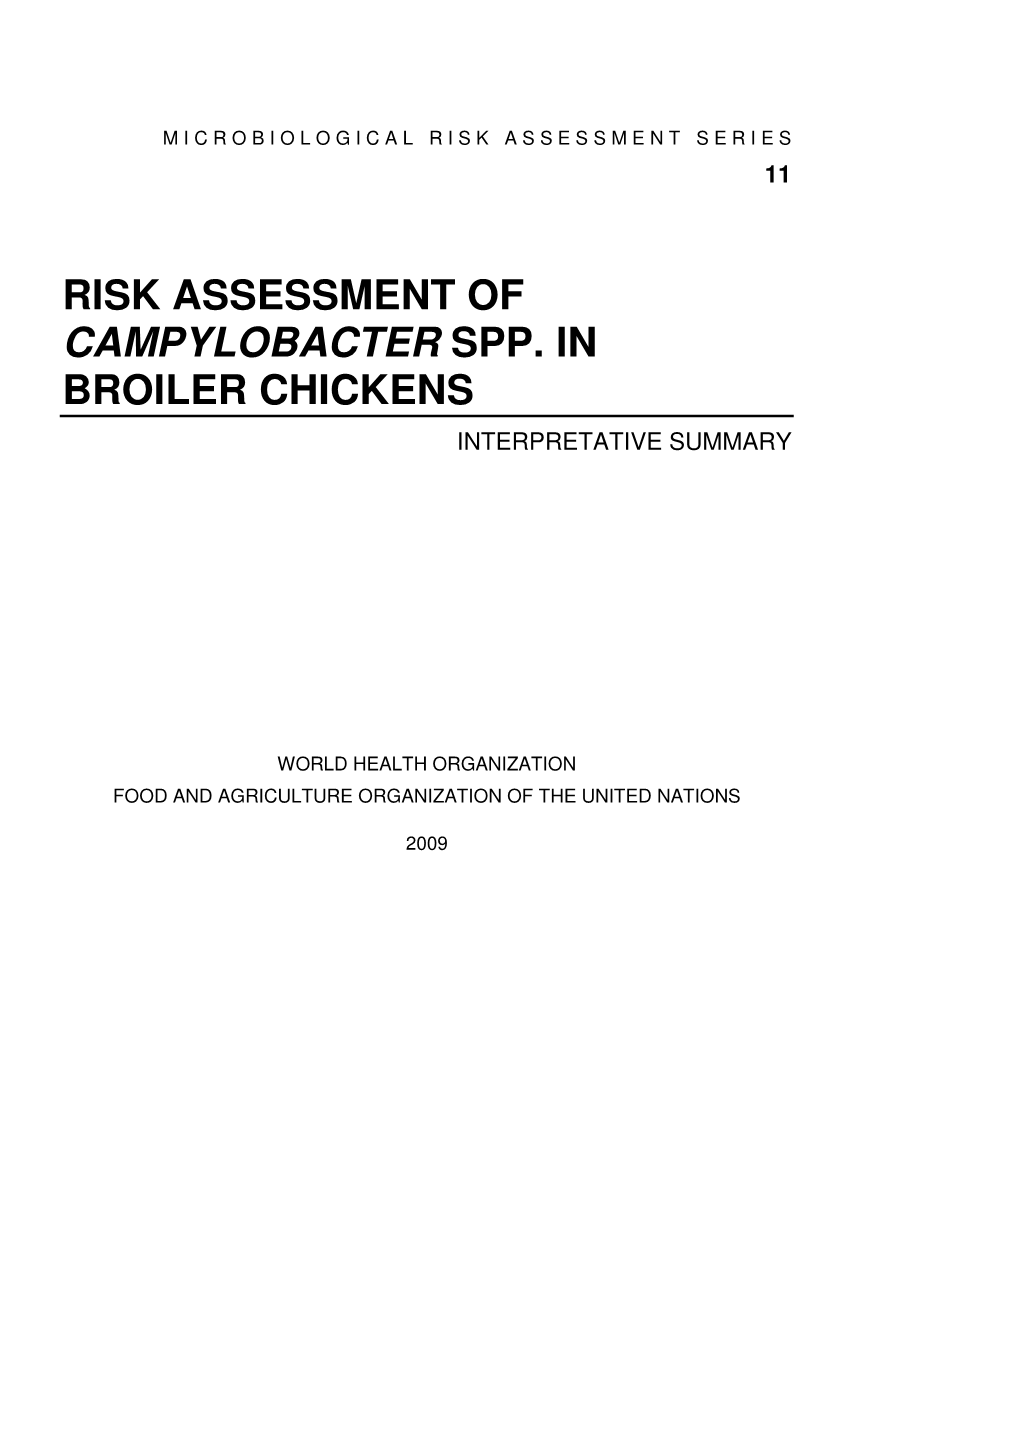 Risk Assessment of Campylobacter Spp. in Broiler Chickens Interpretative Summary